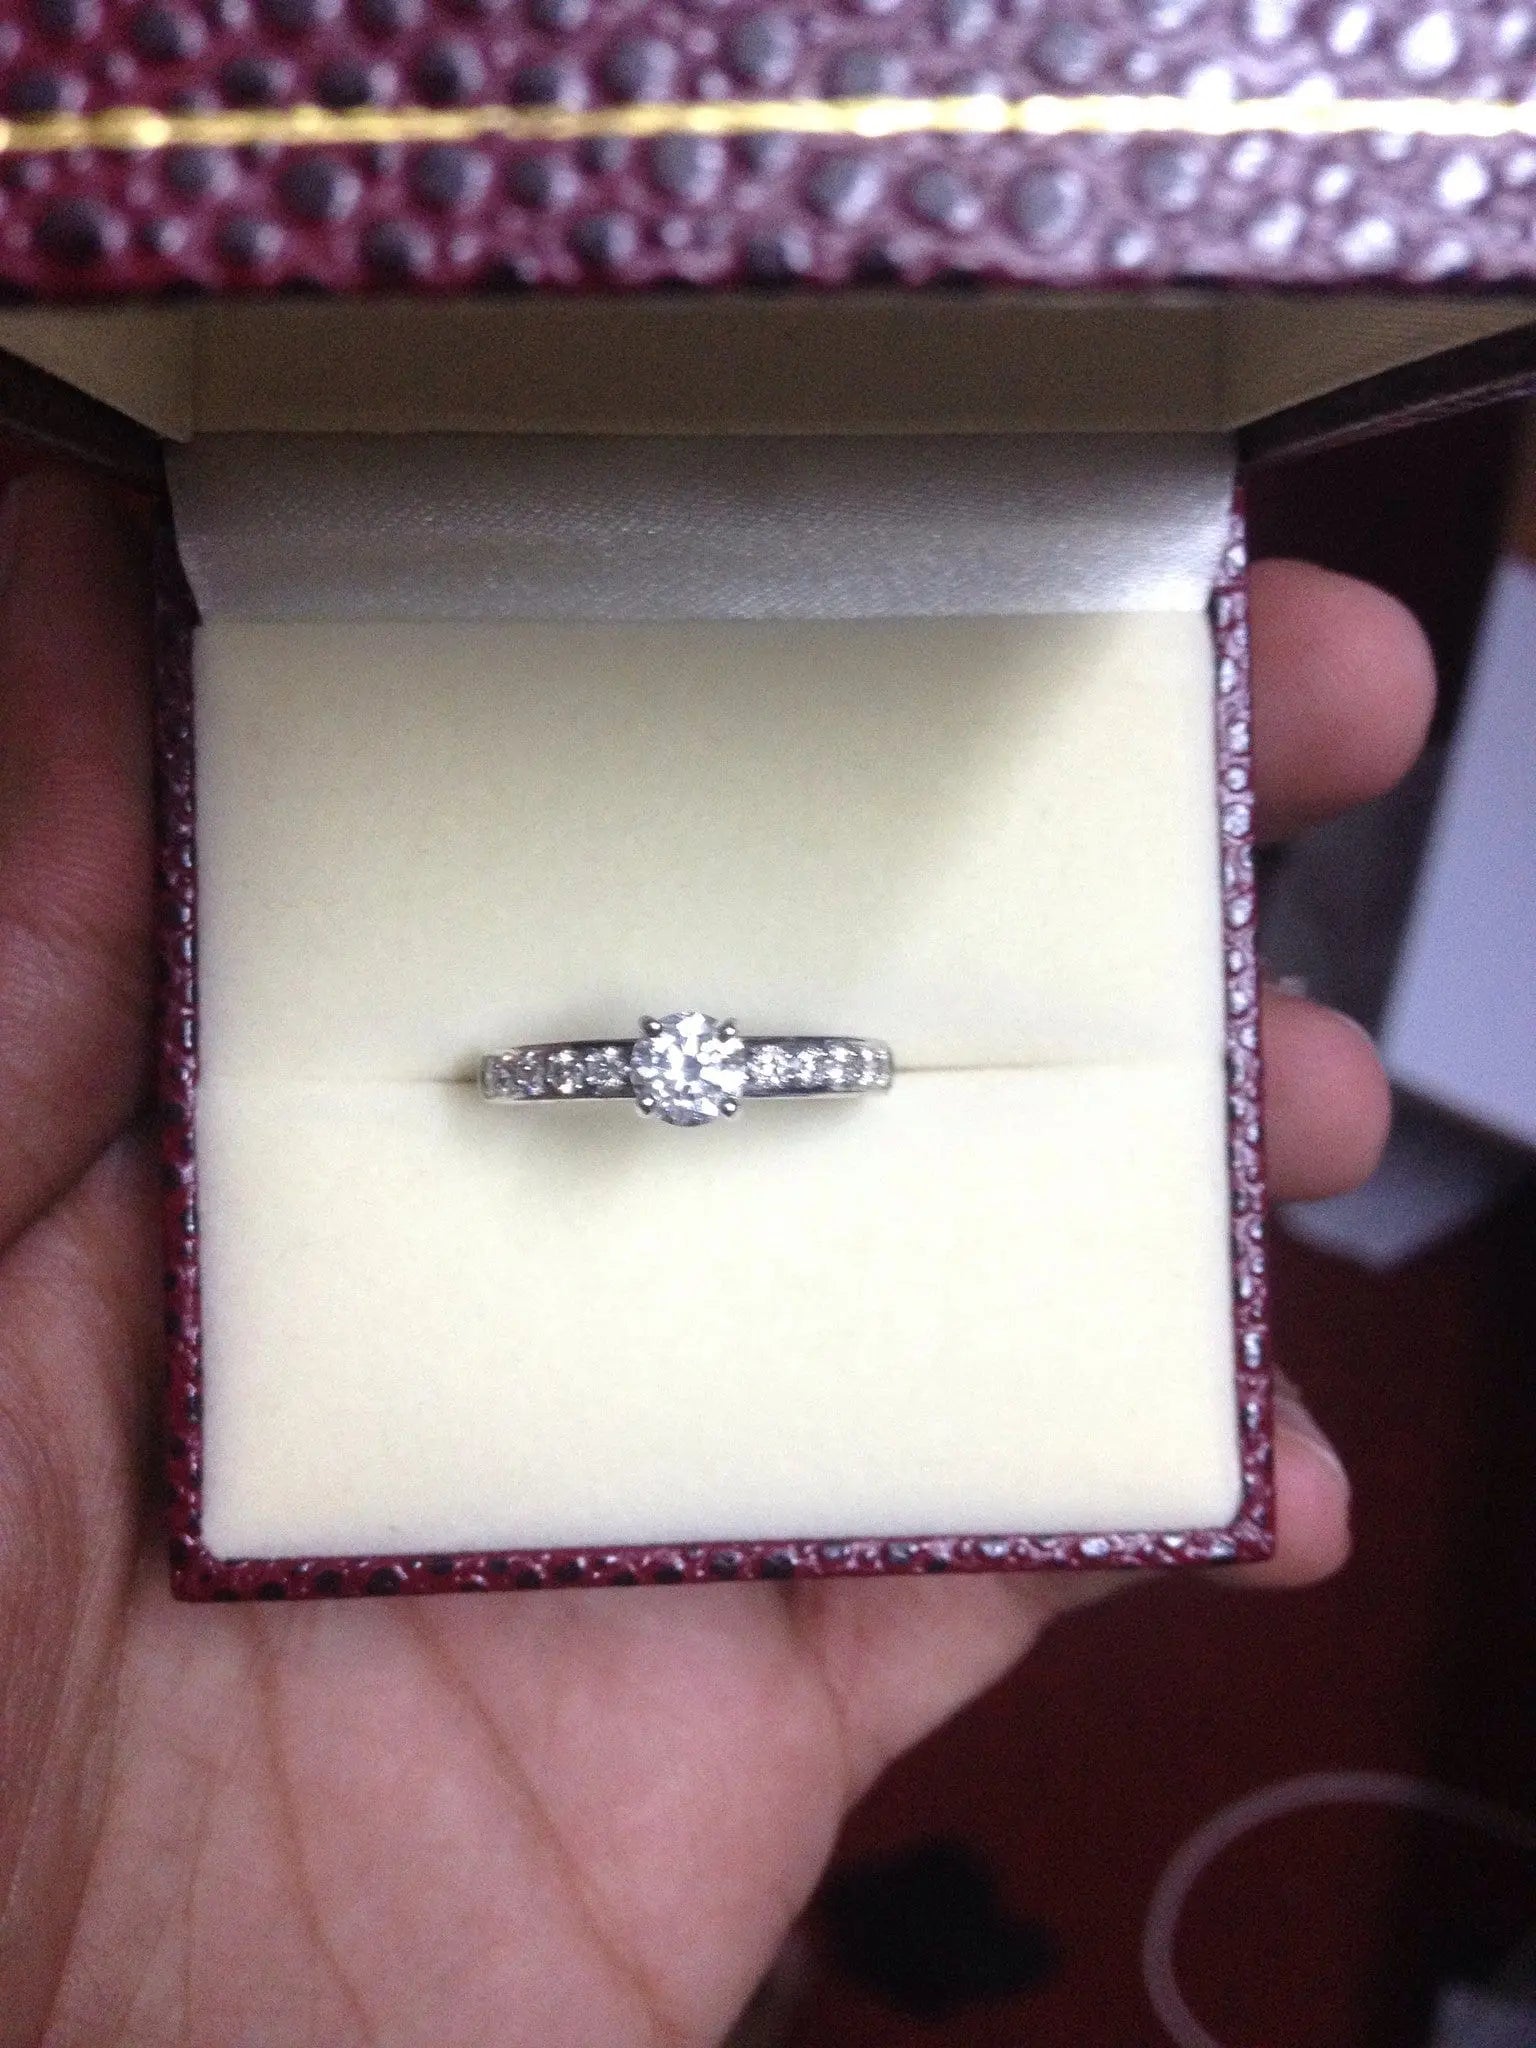 4 carat engagement ring,lab diamond website from europe? : r/Diamonds